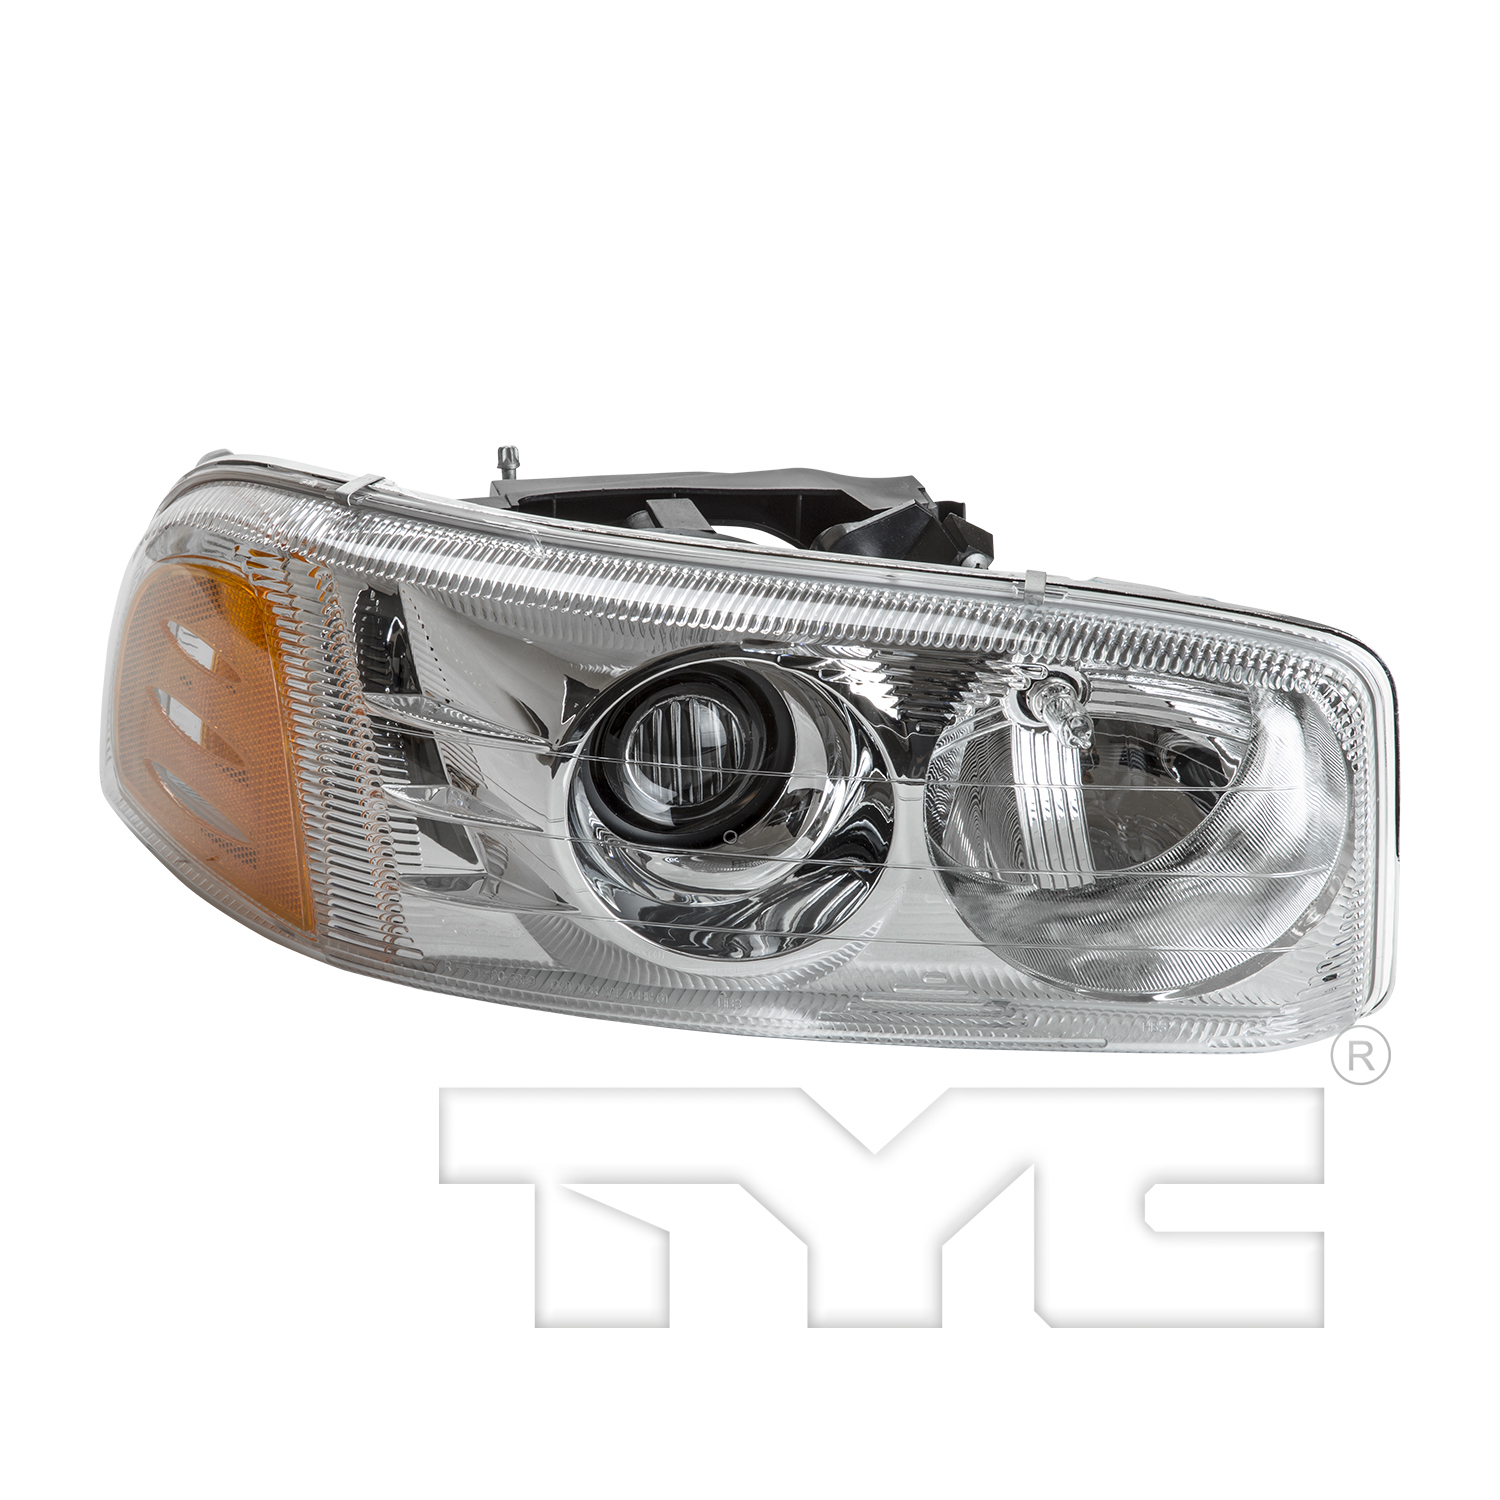 Aftermarket HEADLIGHTS for GMC - YUKON XL 1500, YUKON XL 1500,01-06,RT Headlamp assy composite